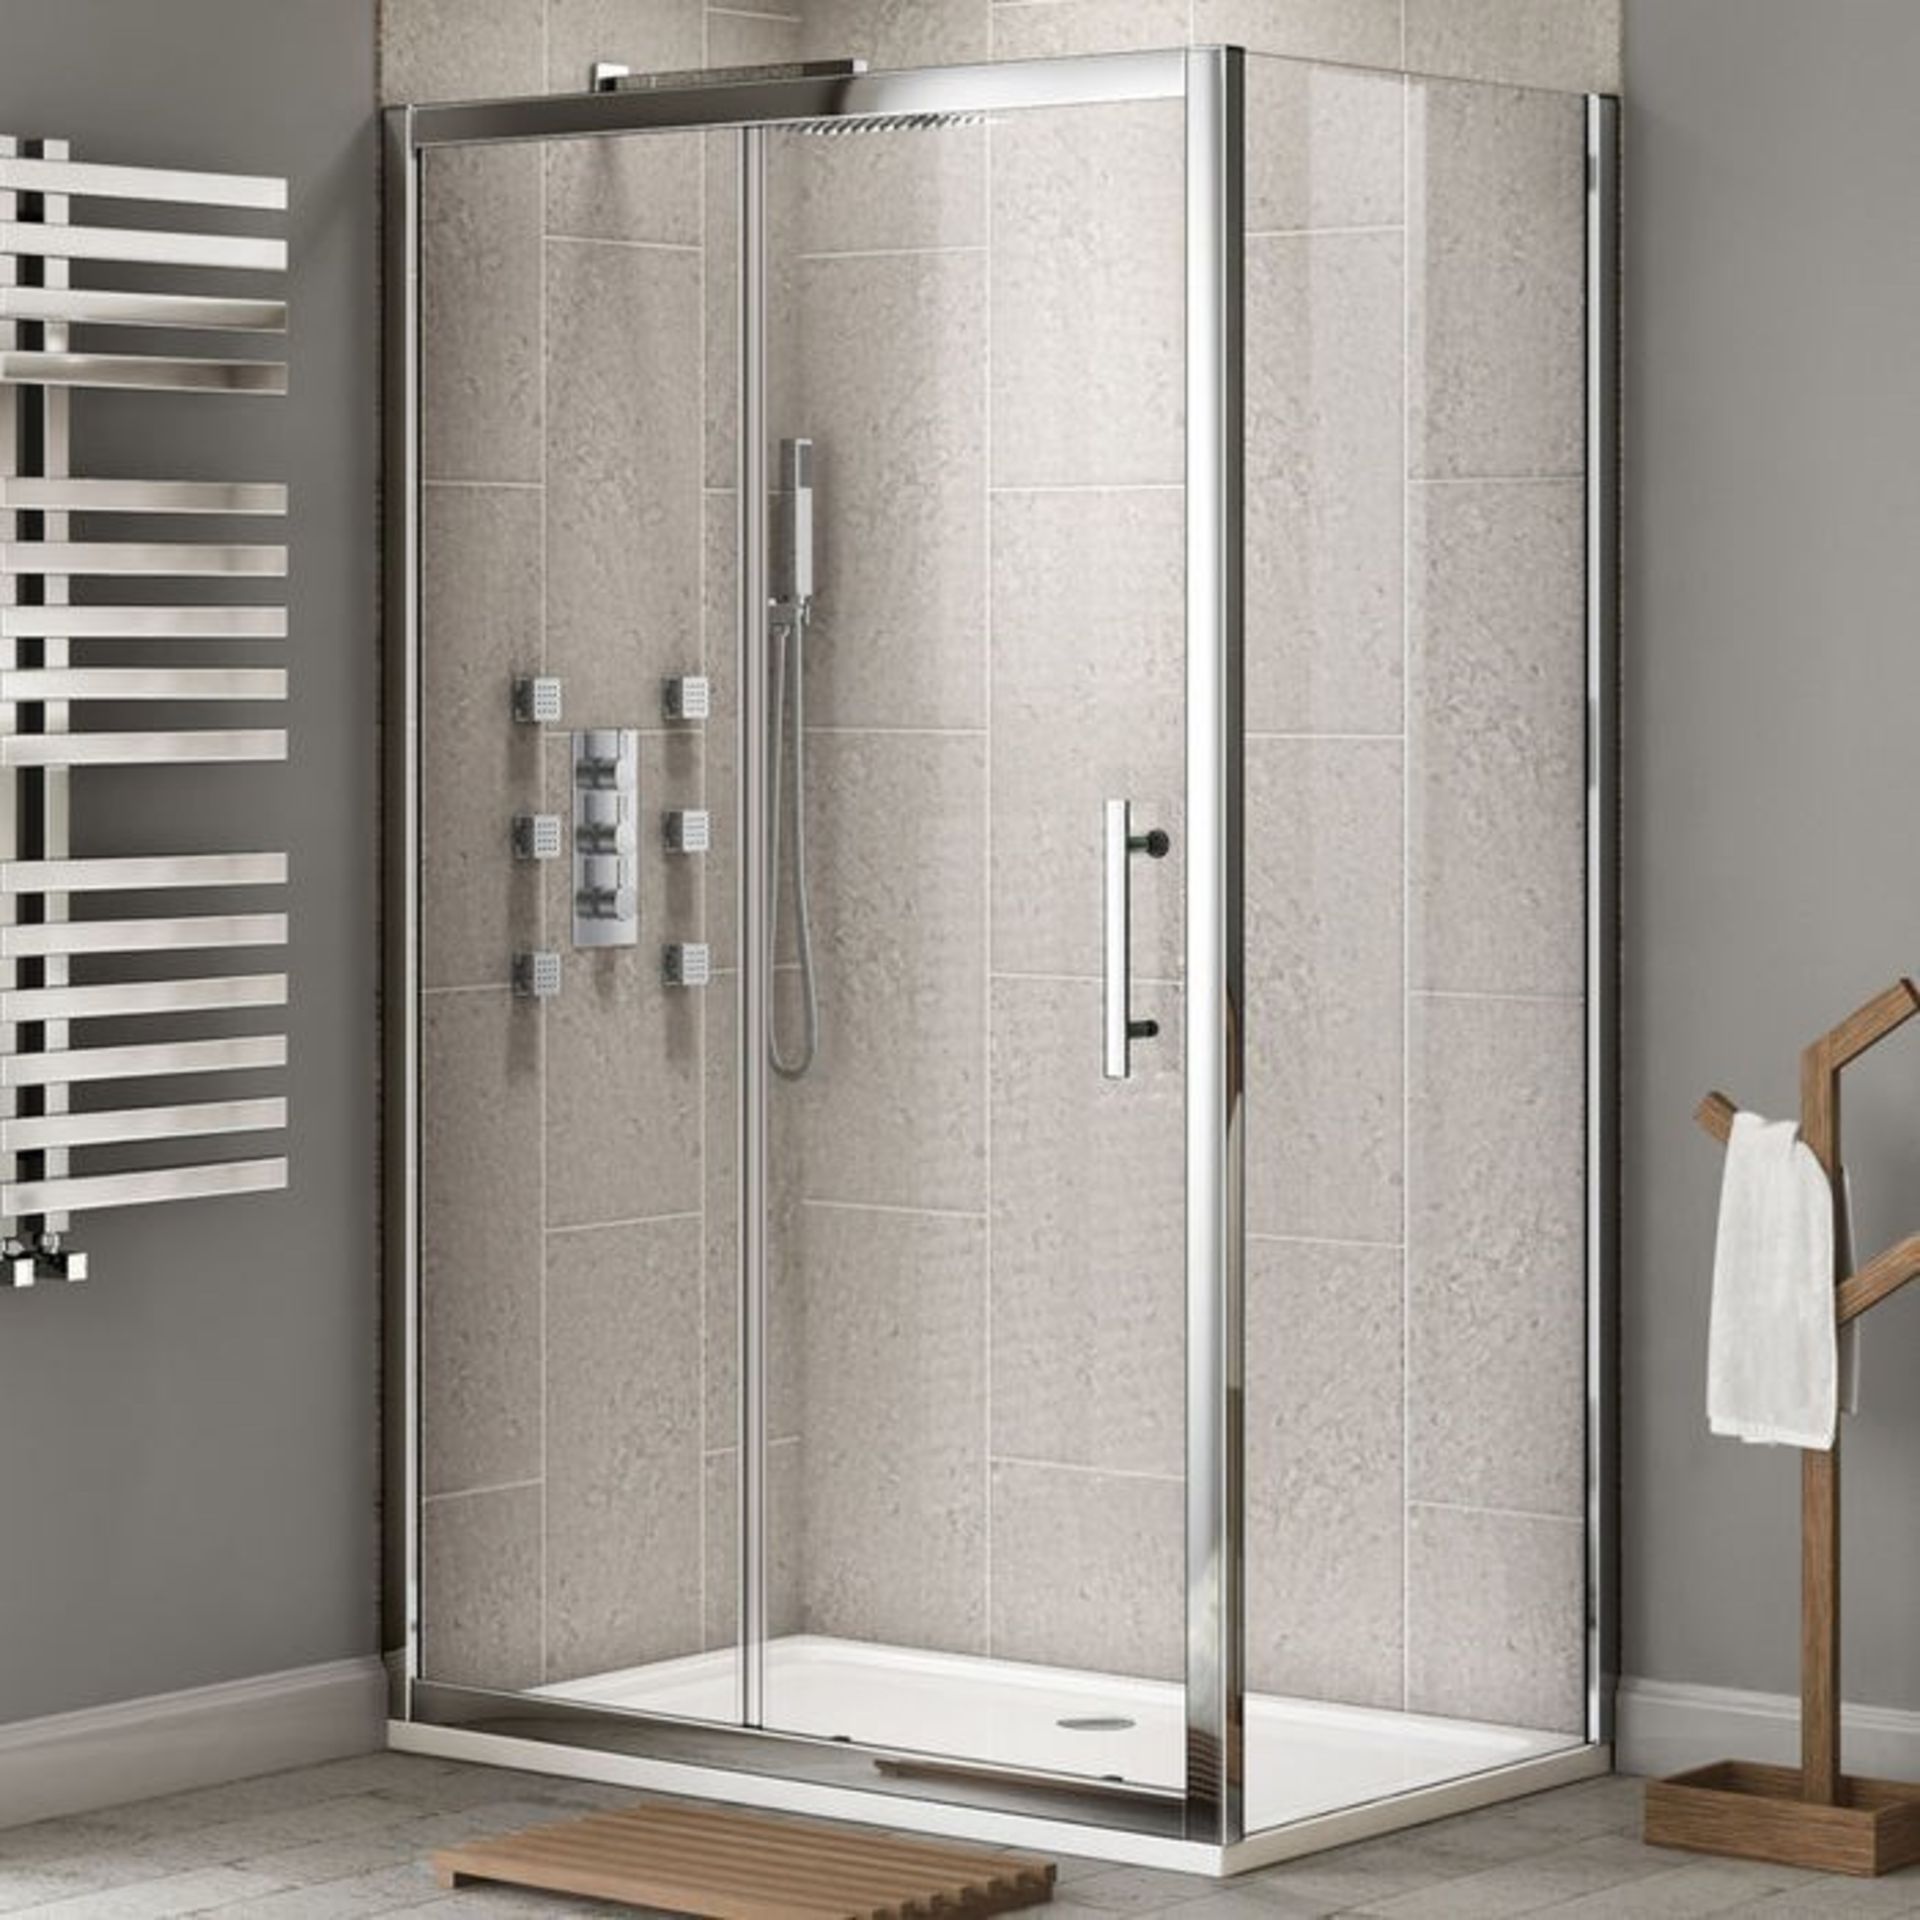 NEW (E12) Twyfords 1700x900mm - Premium EasyClean Sliding Door Shower Enclosure. RRP £549.99.8... - Image 2 of 3